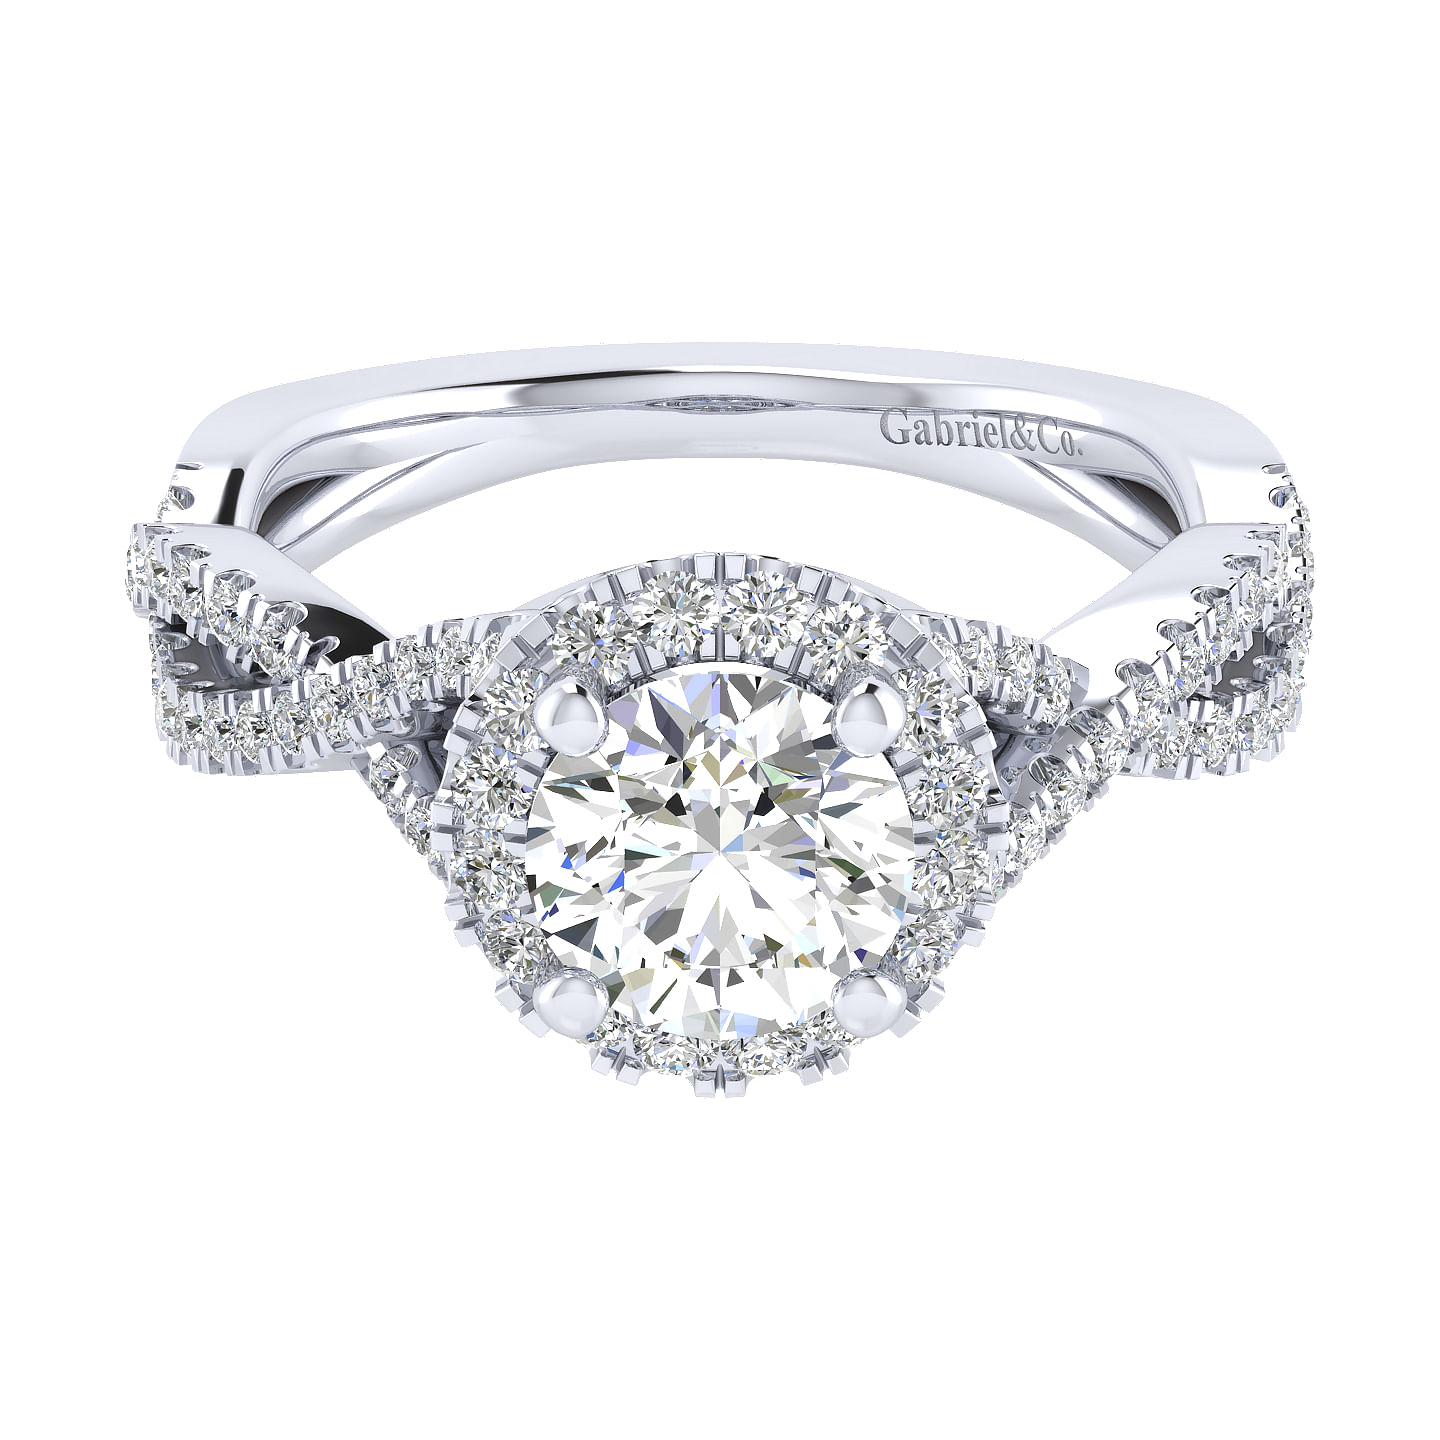 Marissa - 14K White Gold Round Halo Diamond Engagement Ring